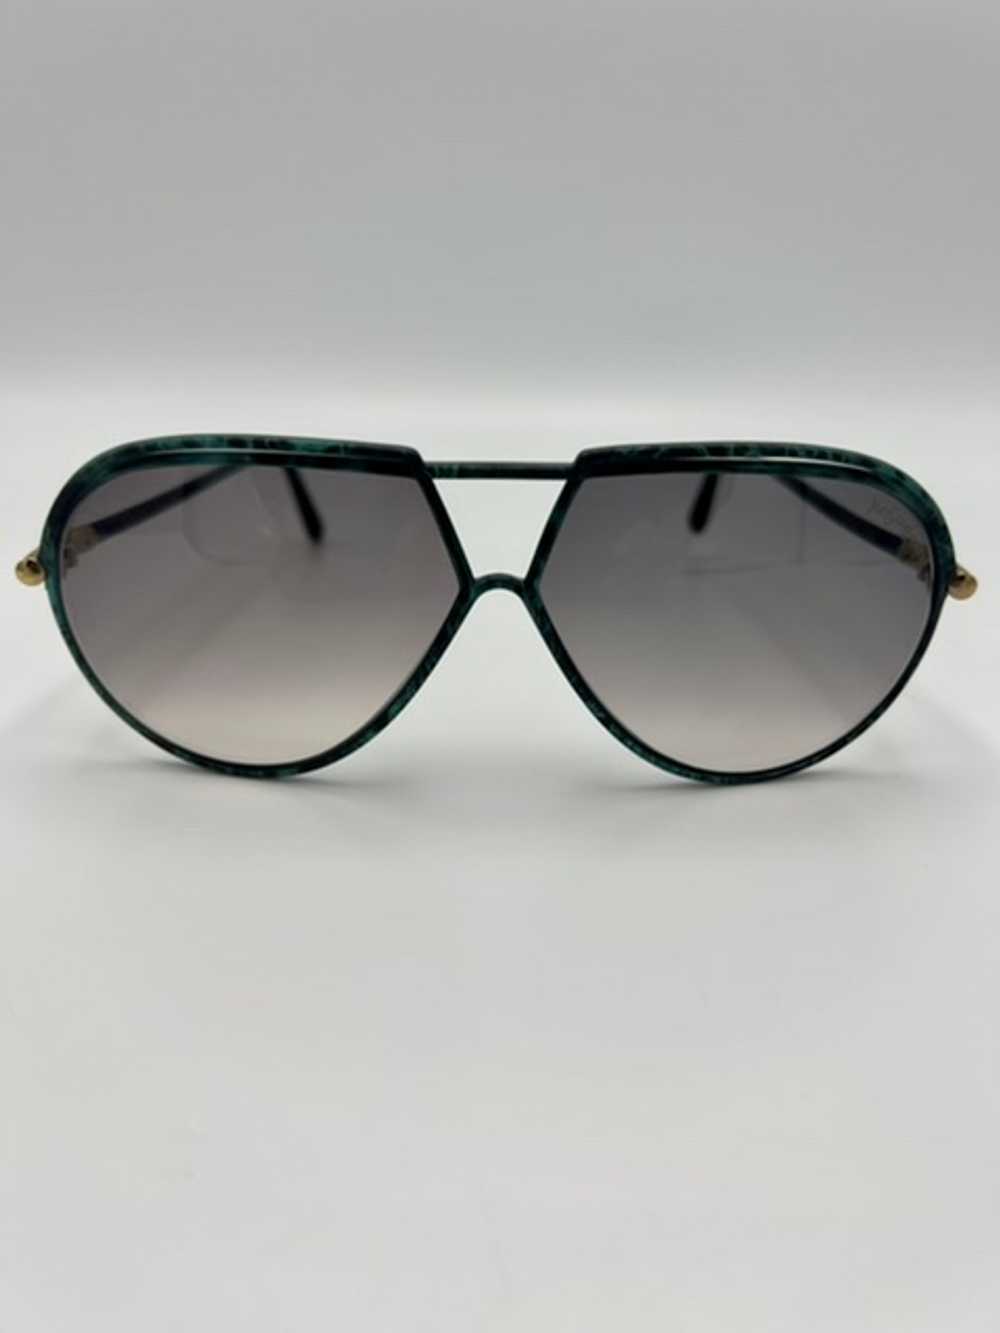 Yves Saint Laurent Coated Frame Aviator Sunglasses - image 1